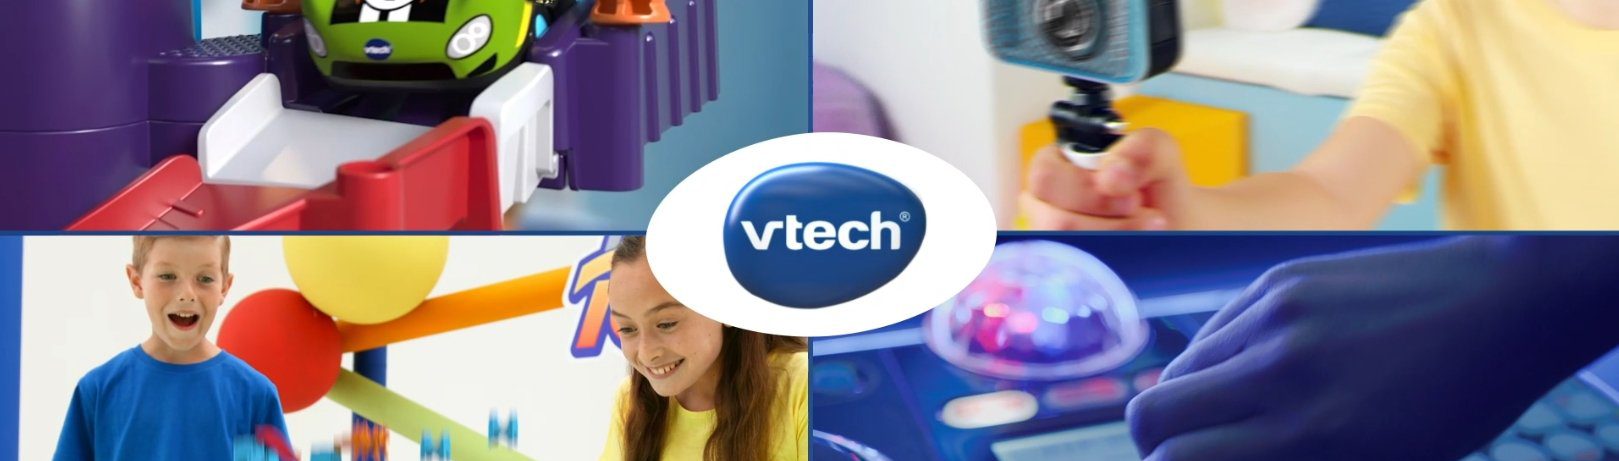 Vtech TV commercials 3